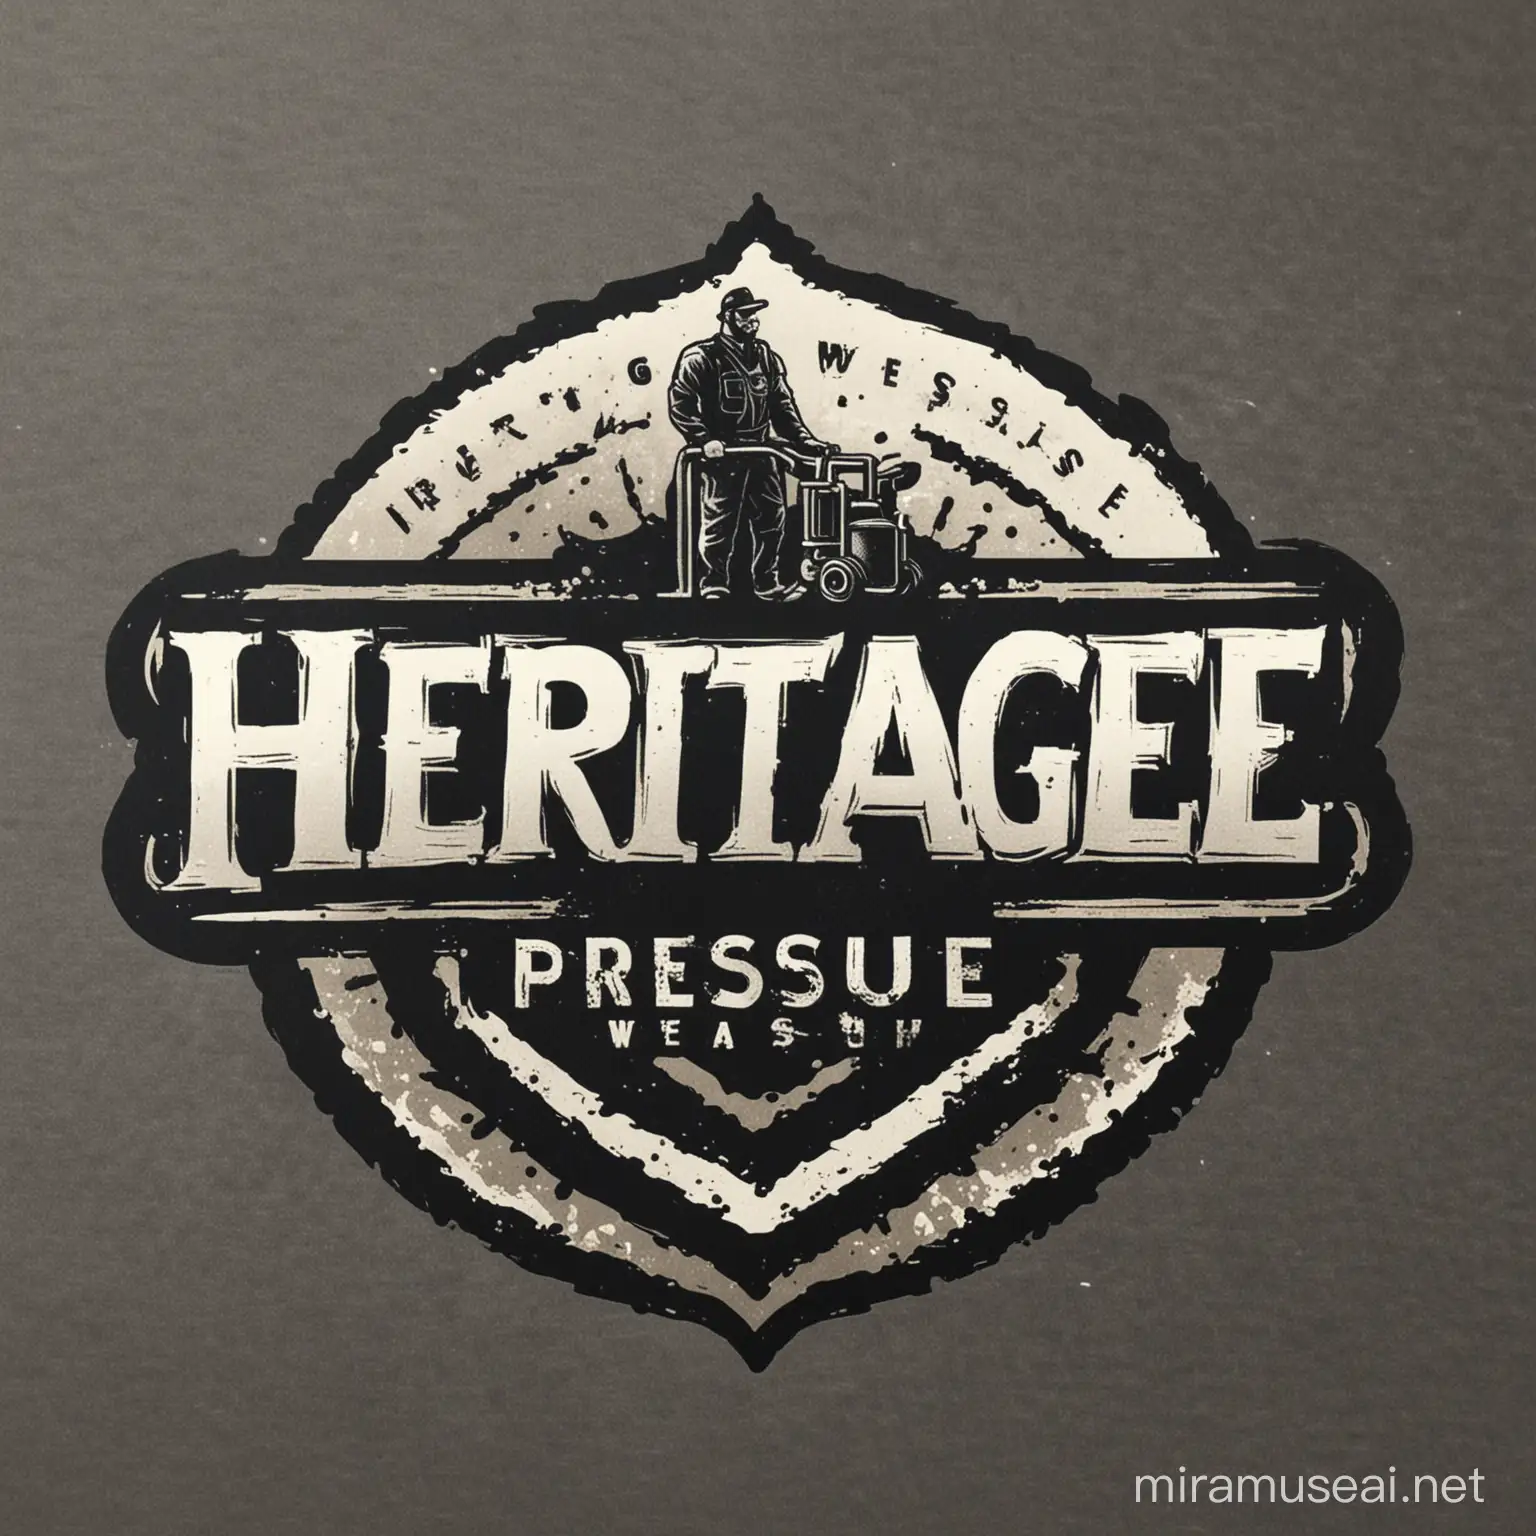 Heritage Pressure Wash Professional Logo Design in High Resolution